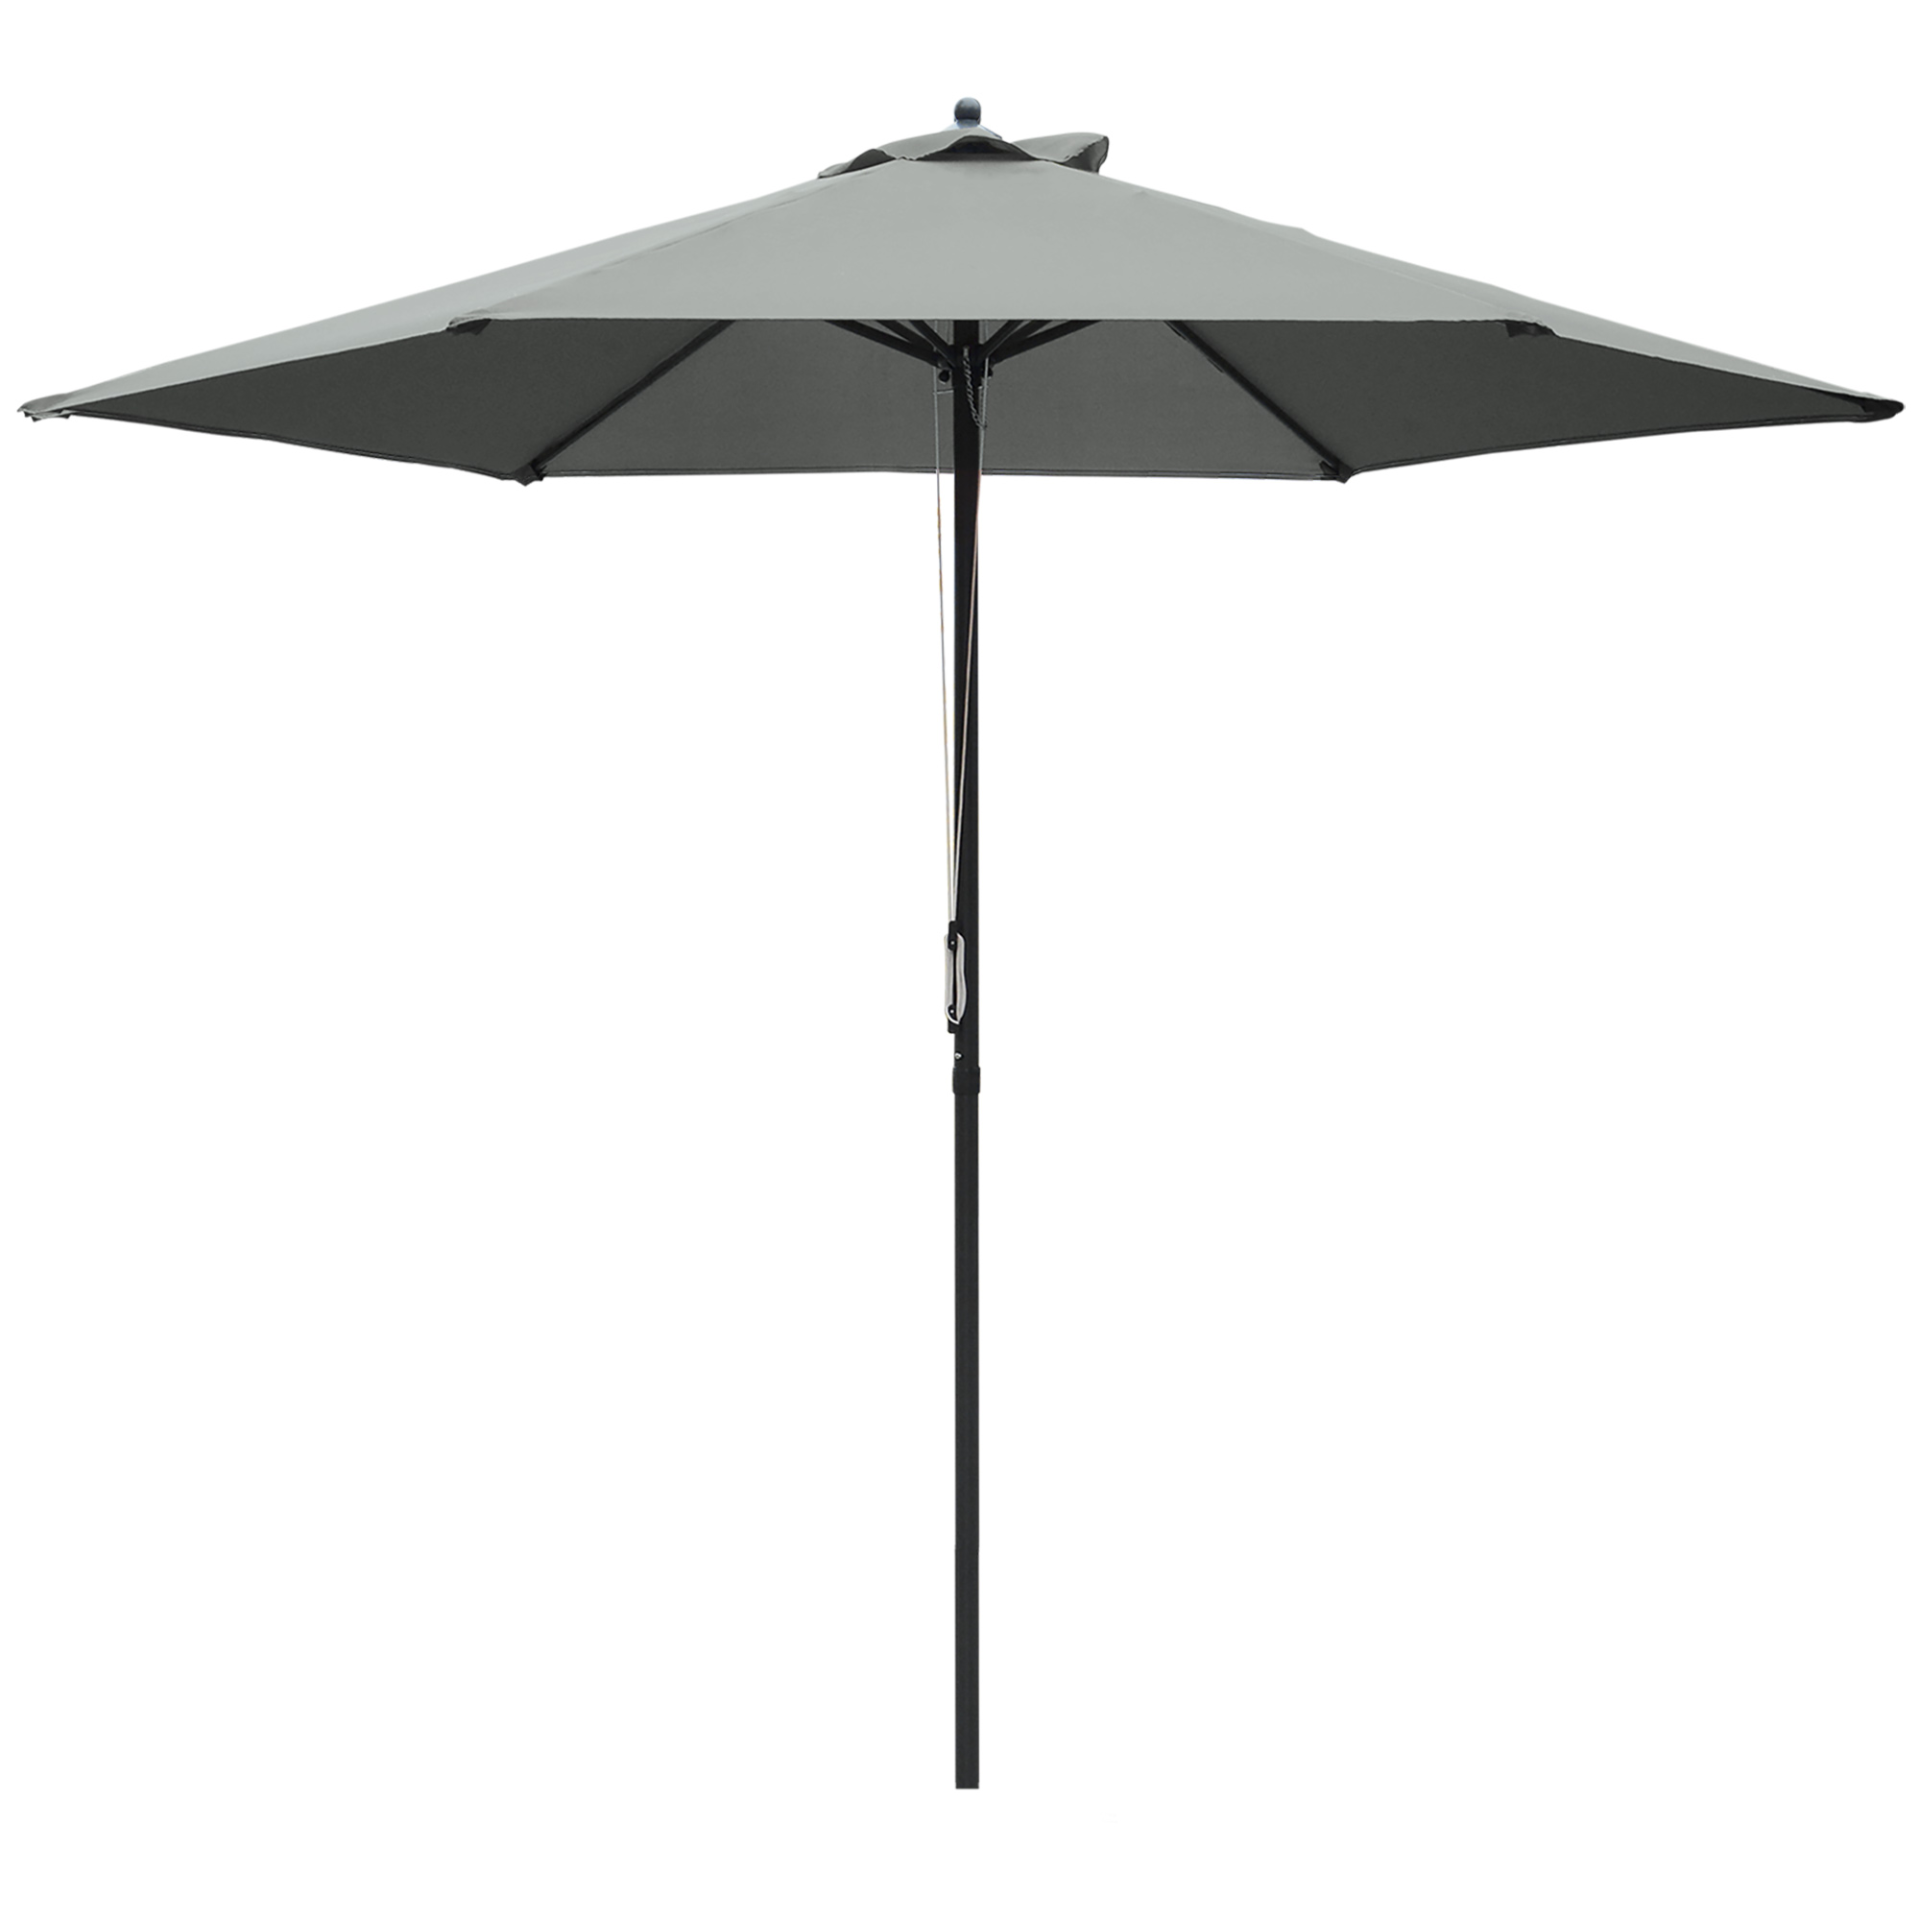 Outsunny 2.8m Patio Parasols Umbrellas Outdoor 6 Ribs Sunshade Canopy Manual Push Garden Backyard Furniture, Dark Grey